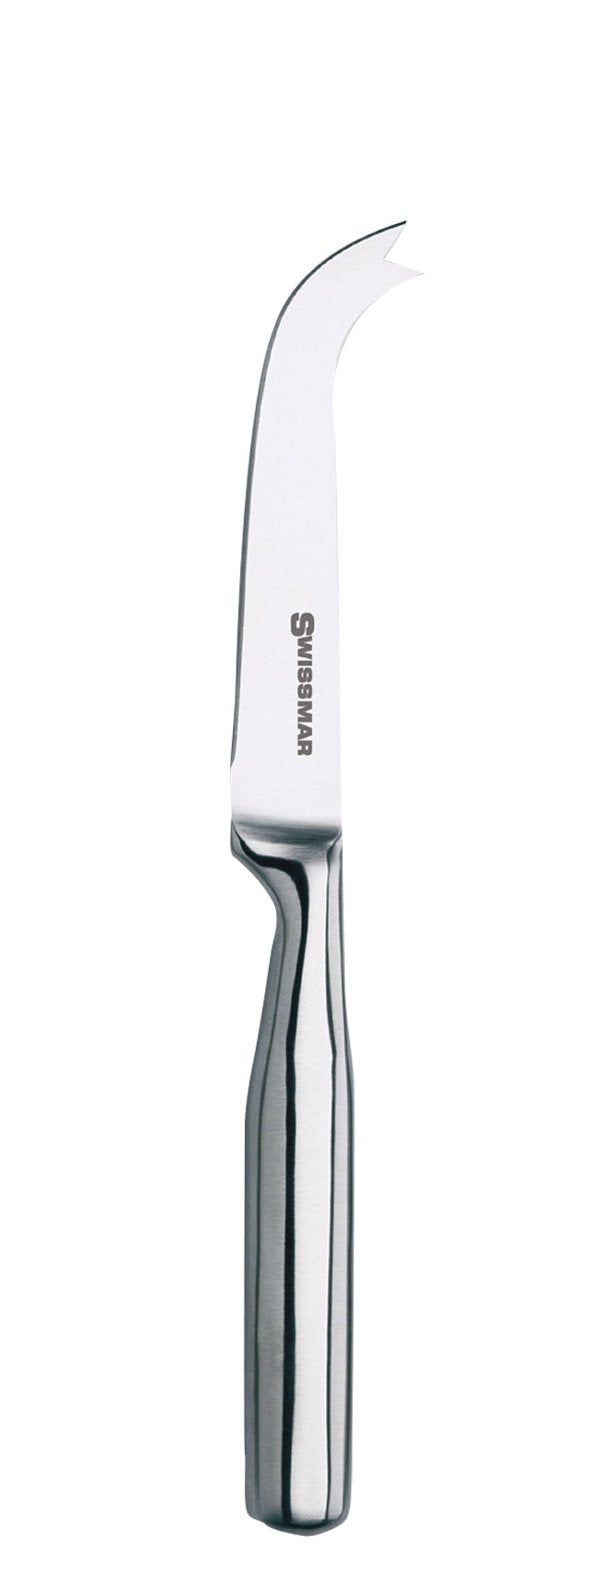 Swissmar Universal Cheese Knife